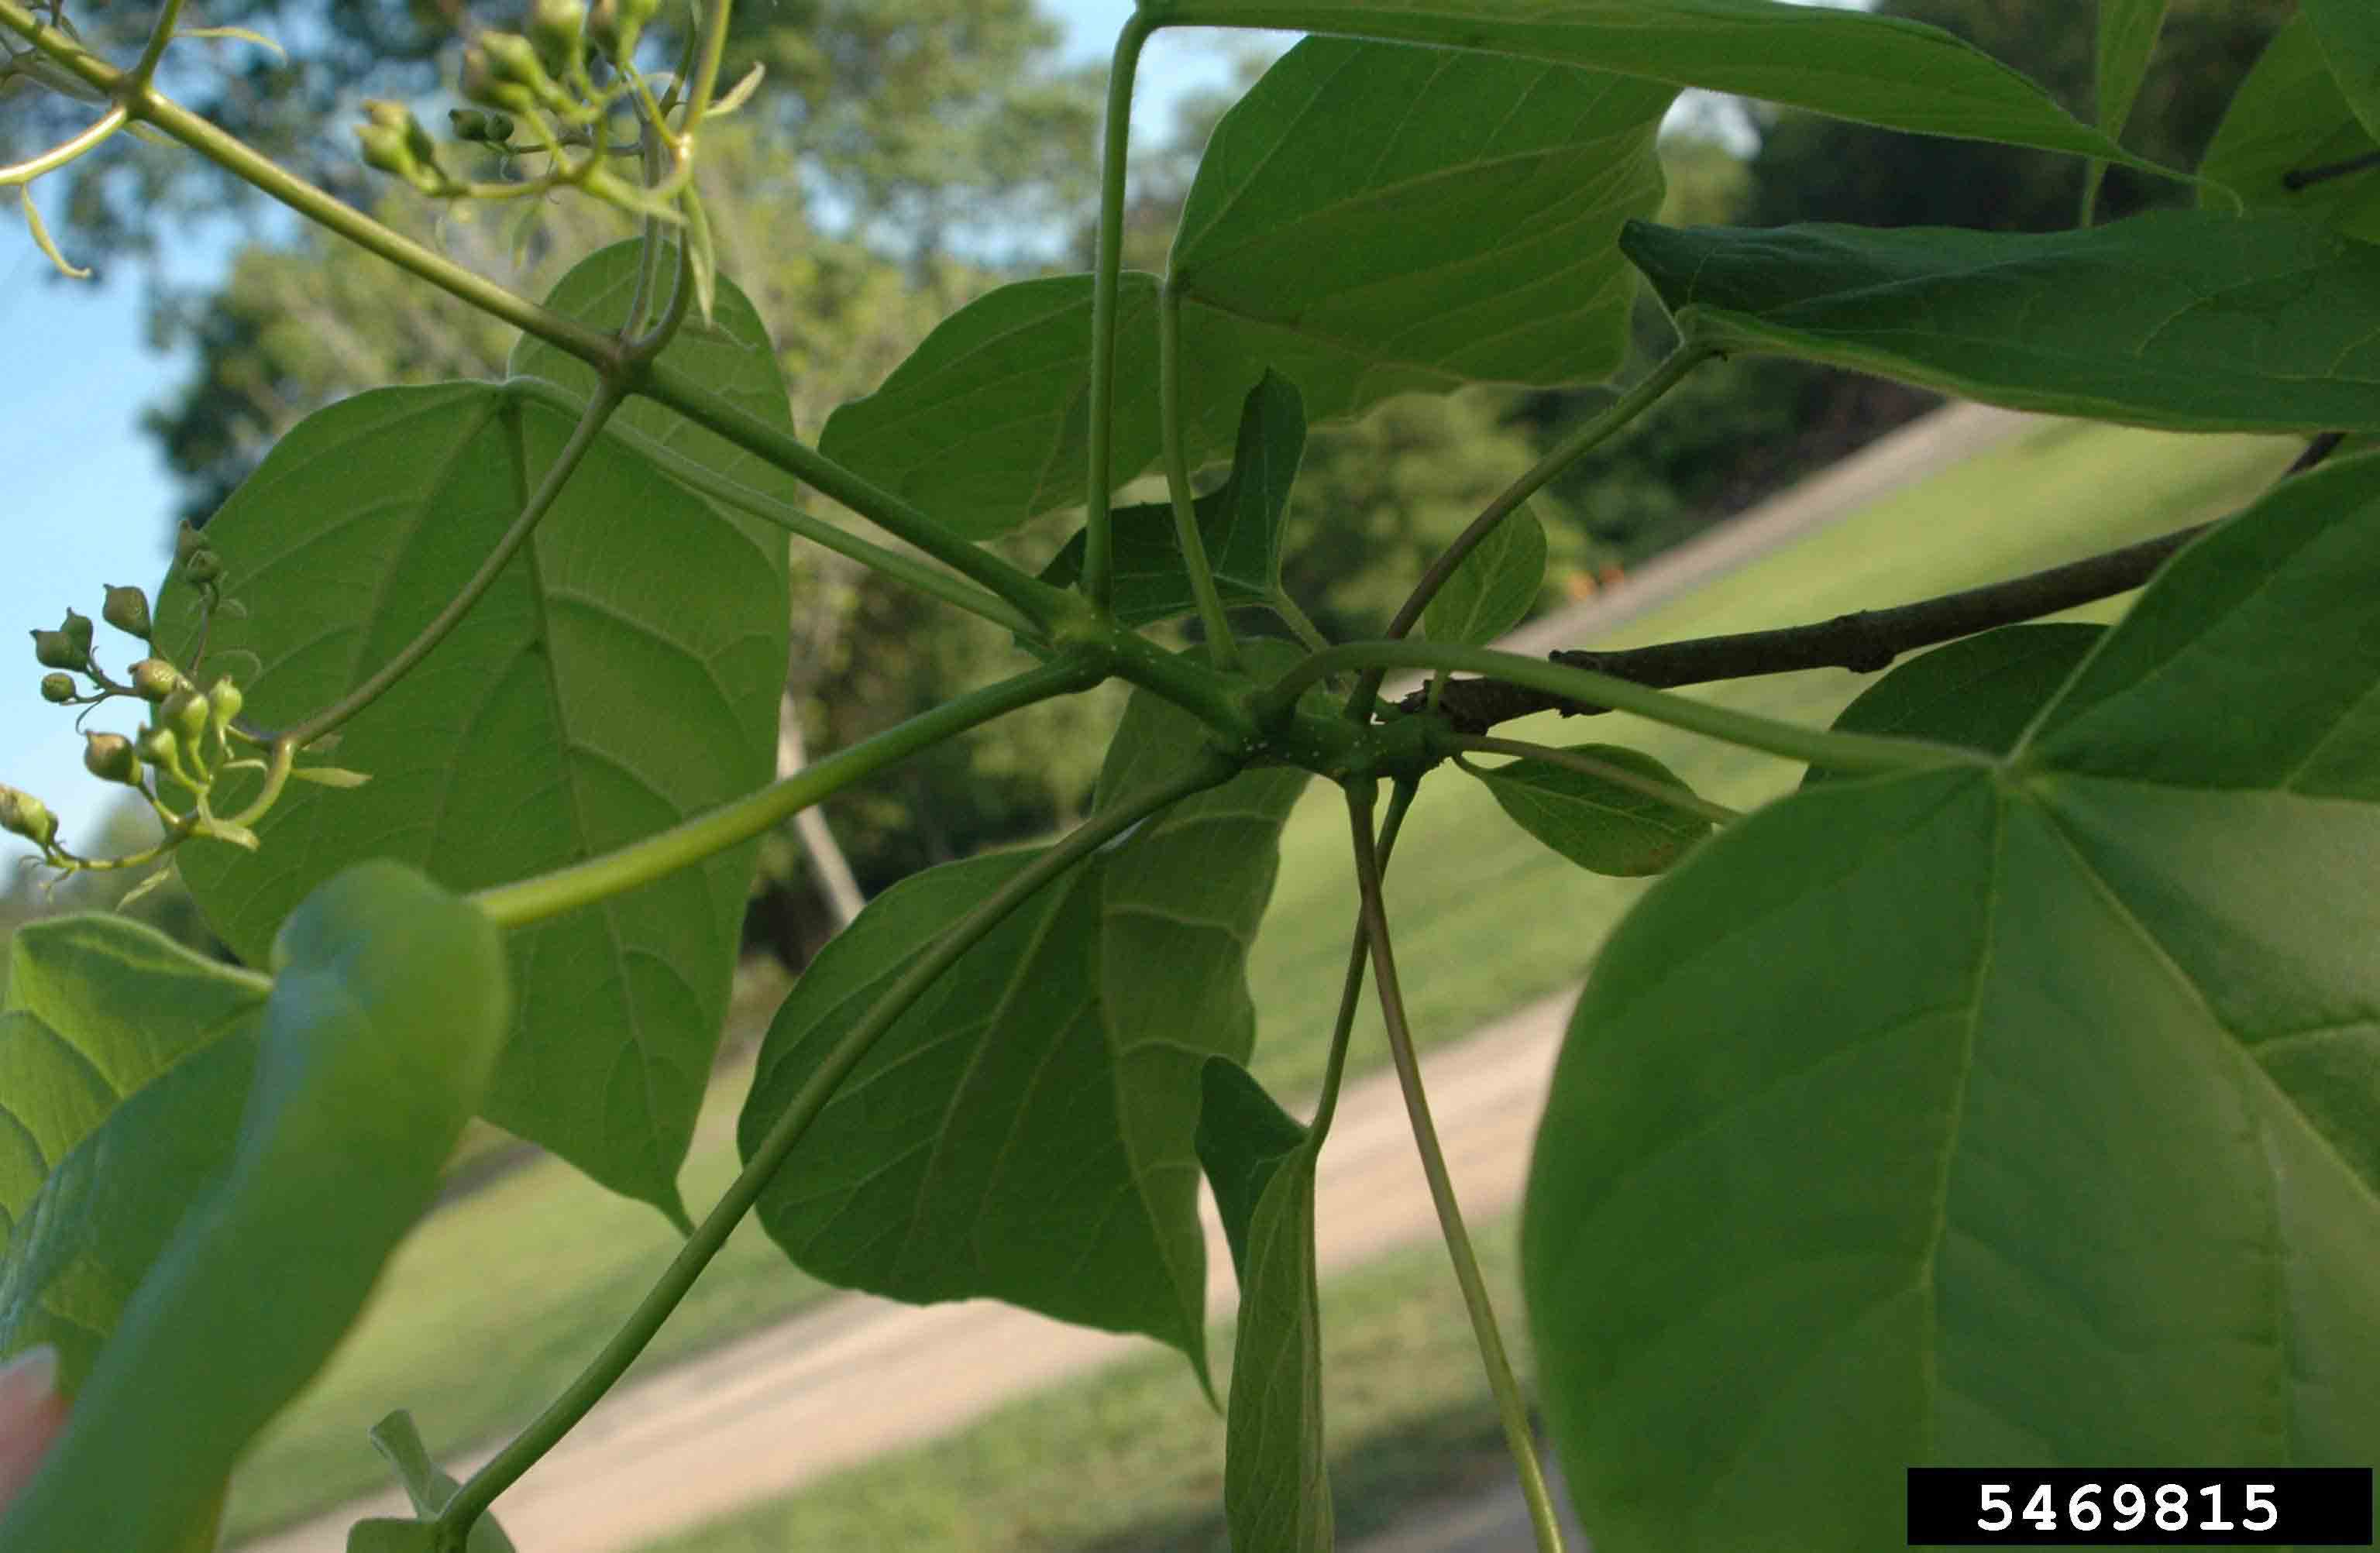 Southern catalpa stem arrangement